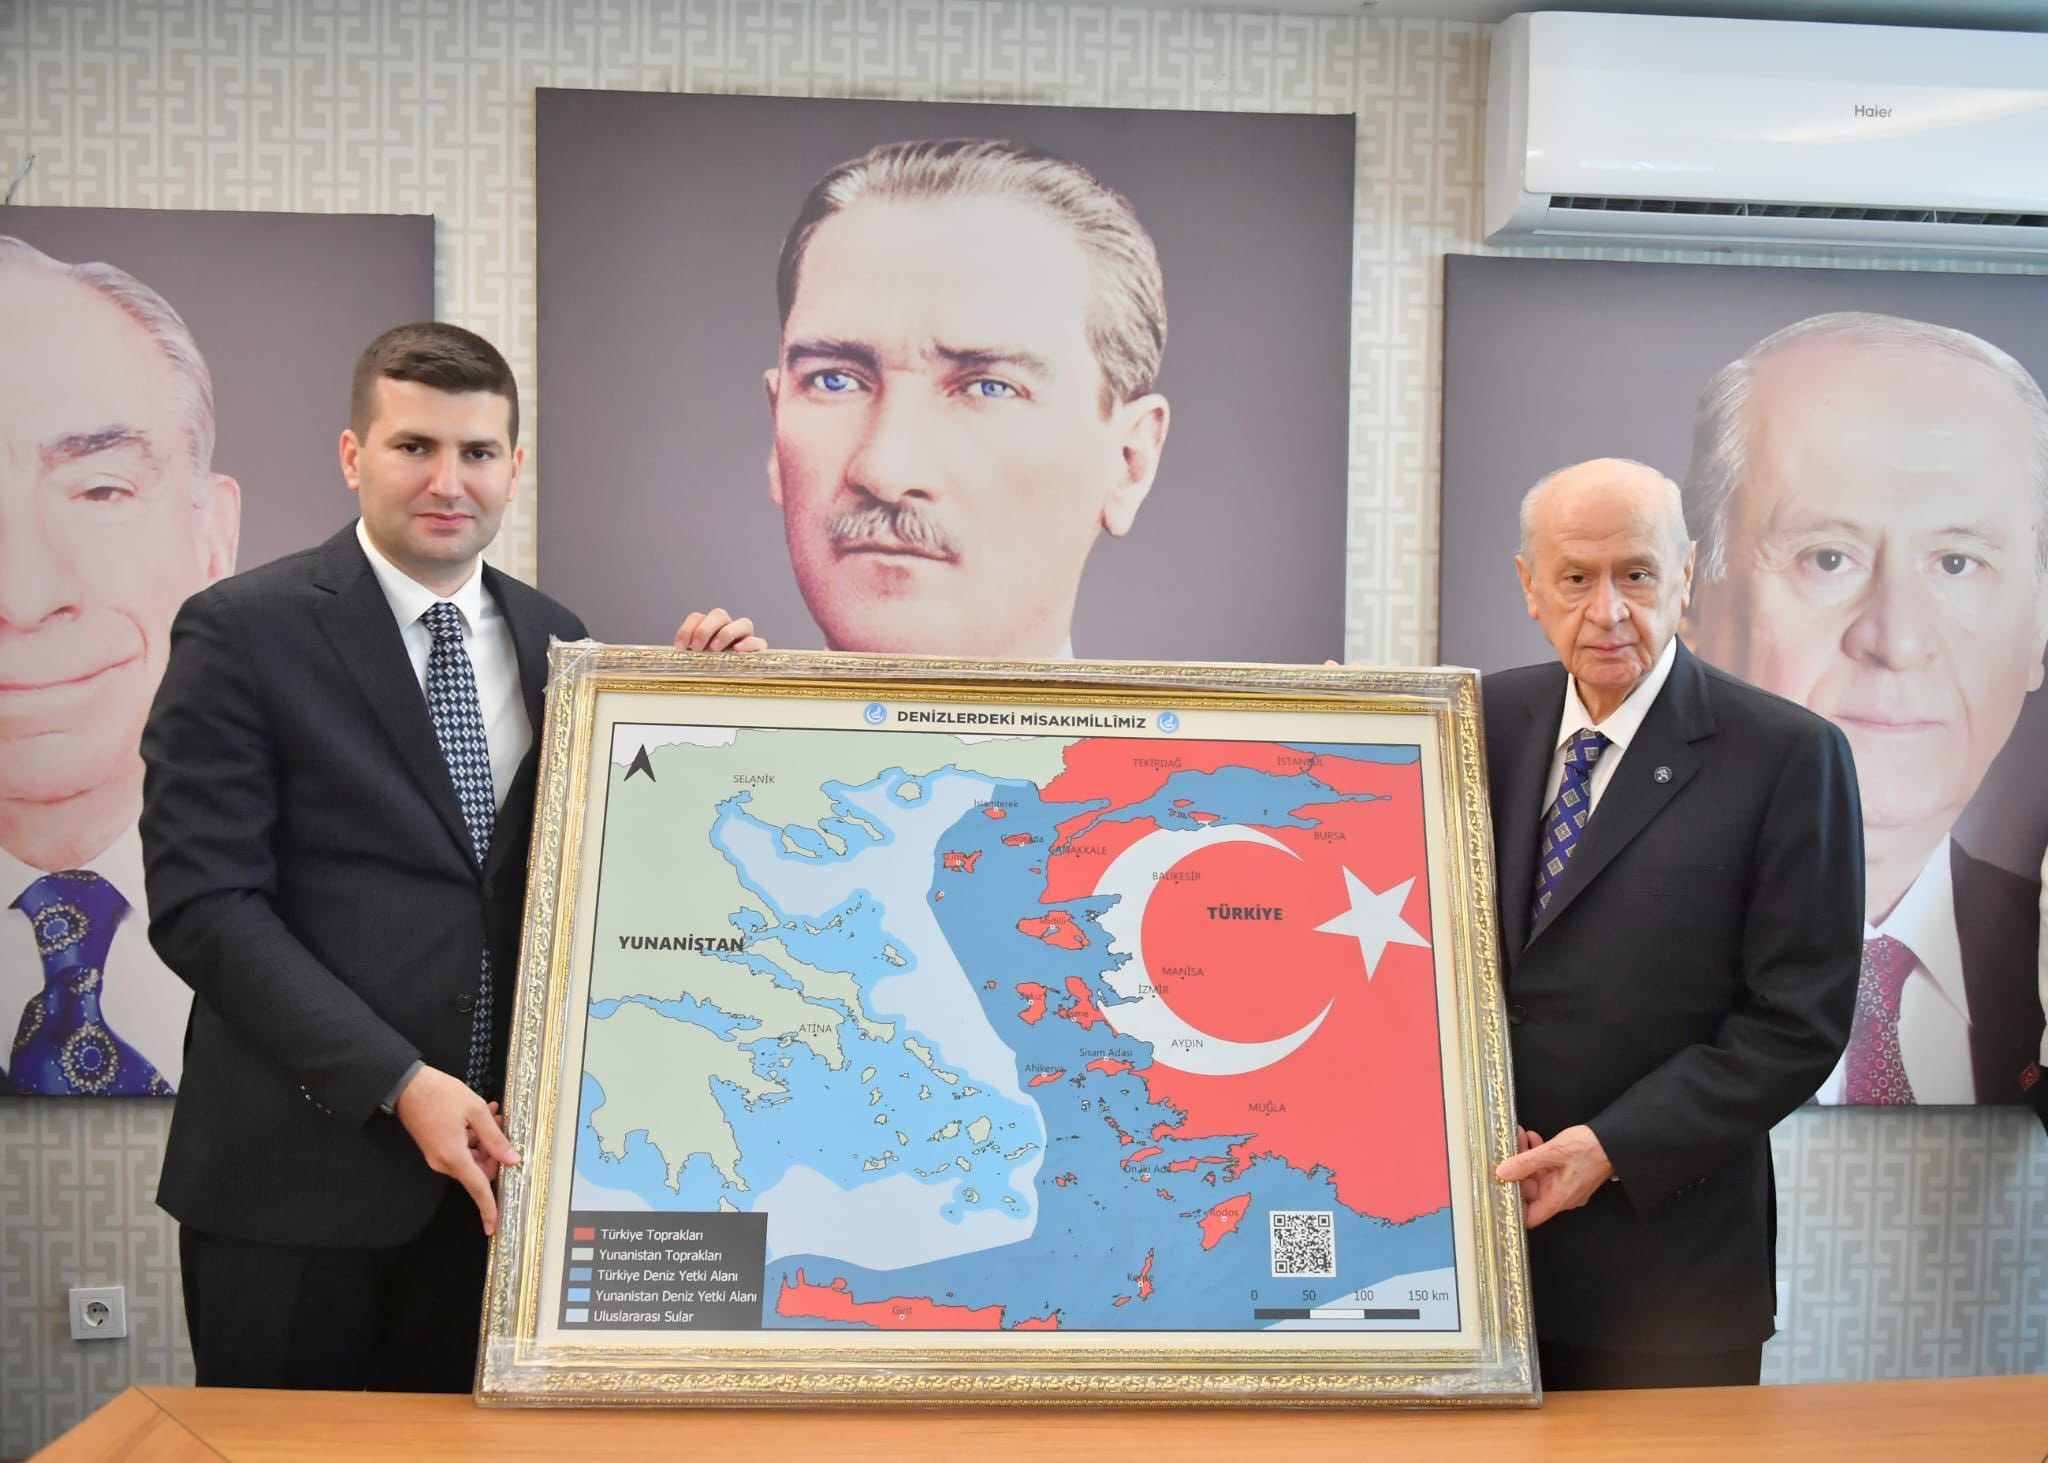 FAZ: Πόσο πιο ανοικτά να το πει ο Ερντογάν; Πάρτε τον στα σοβαρά πριν κάνει Τουρκική την Κρήτη